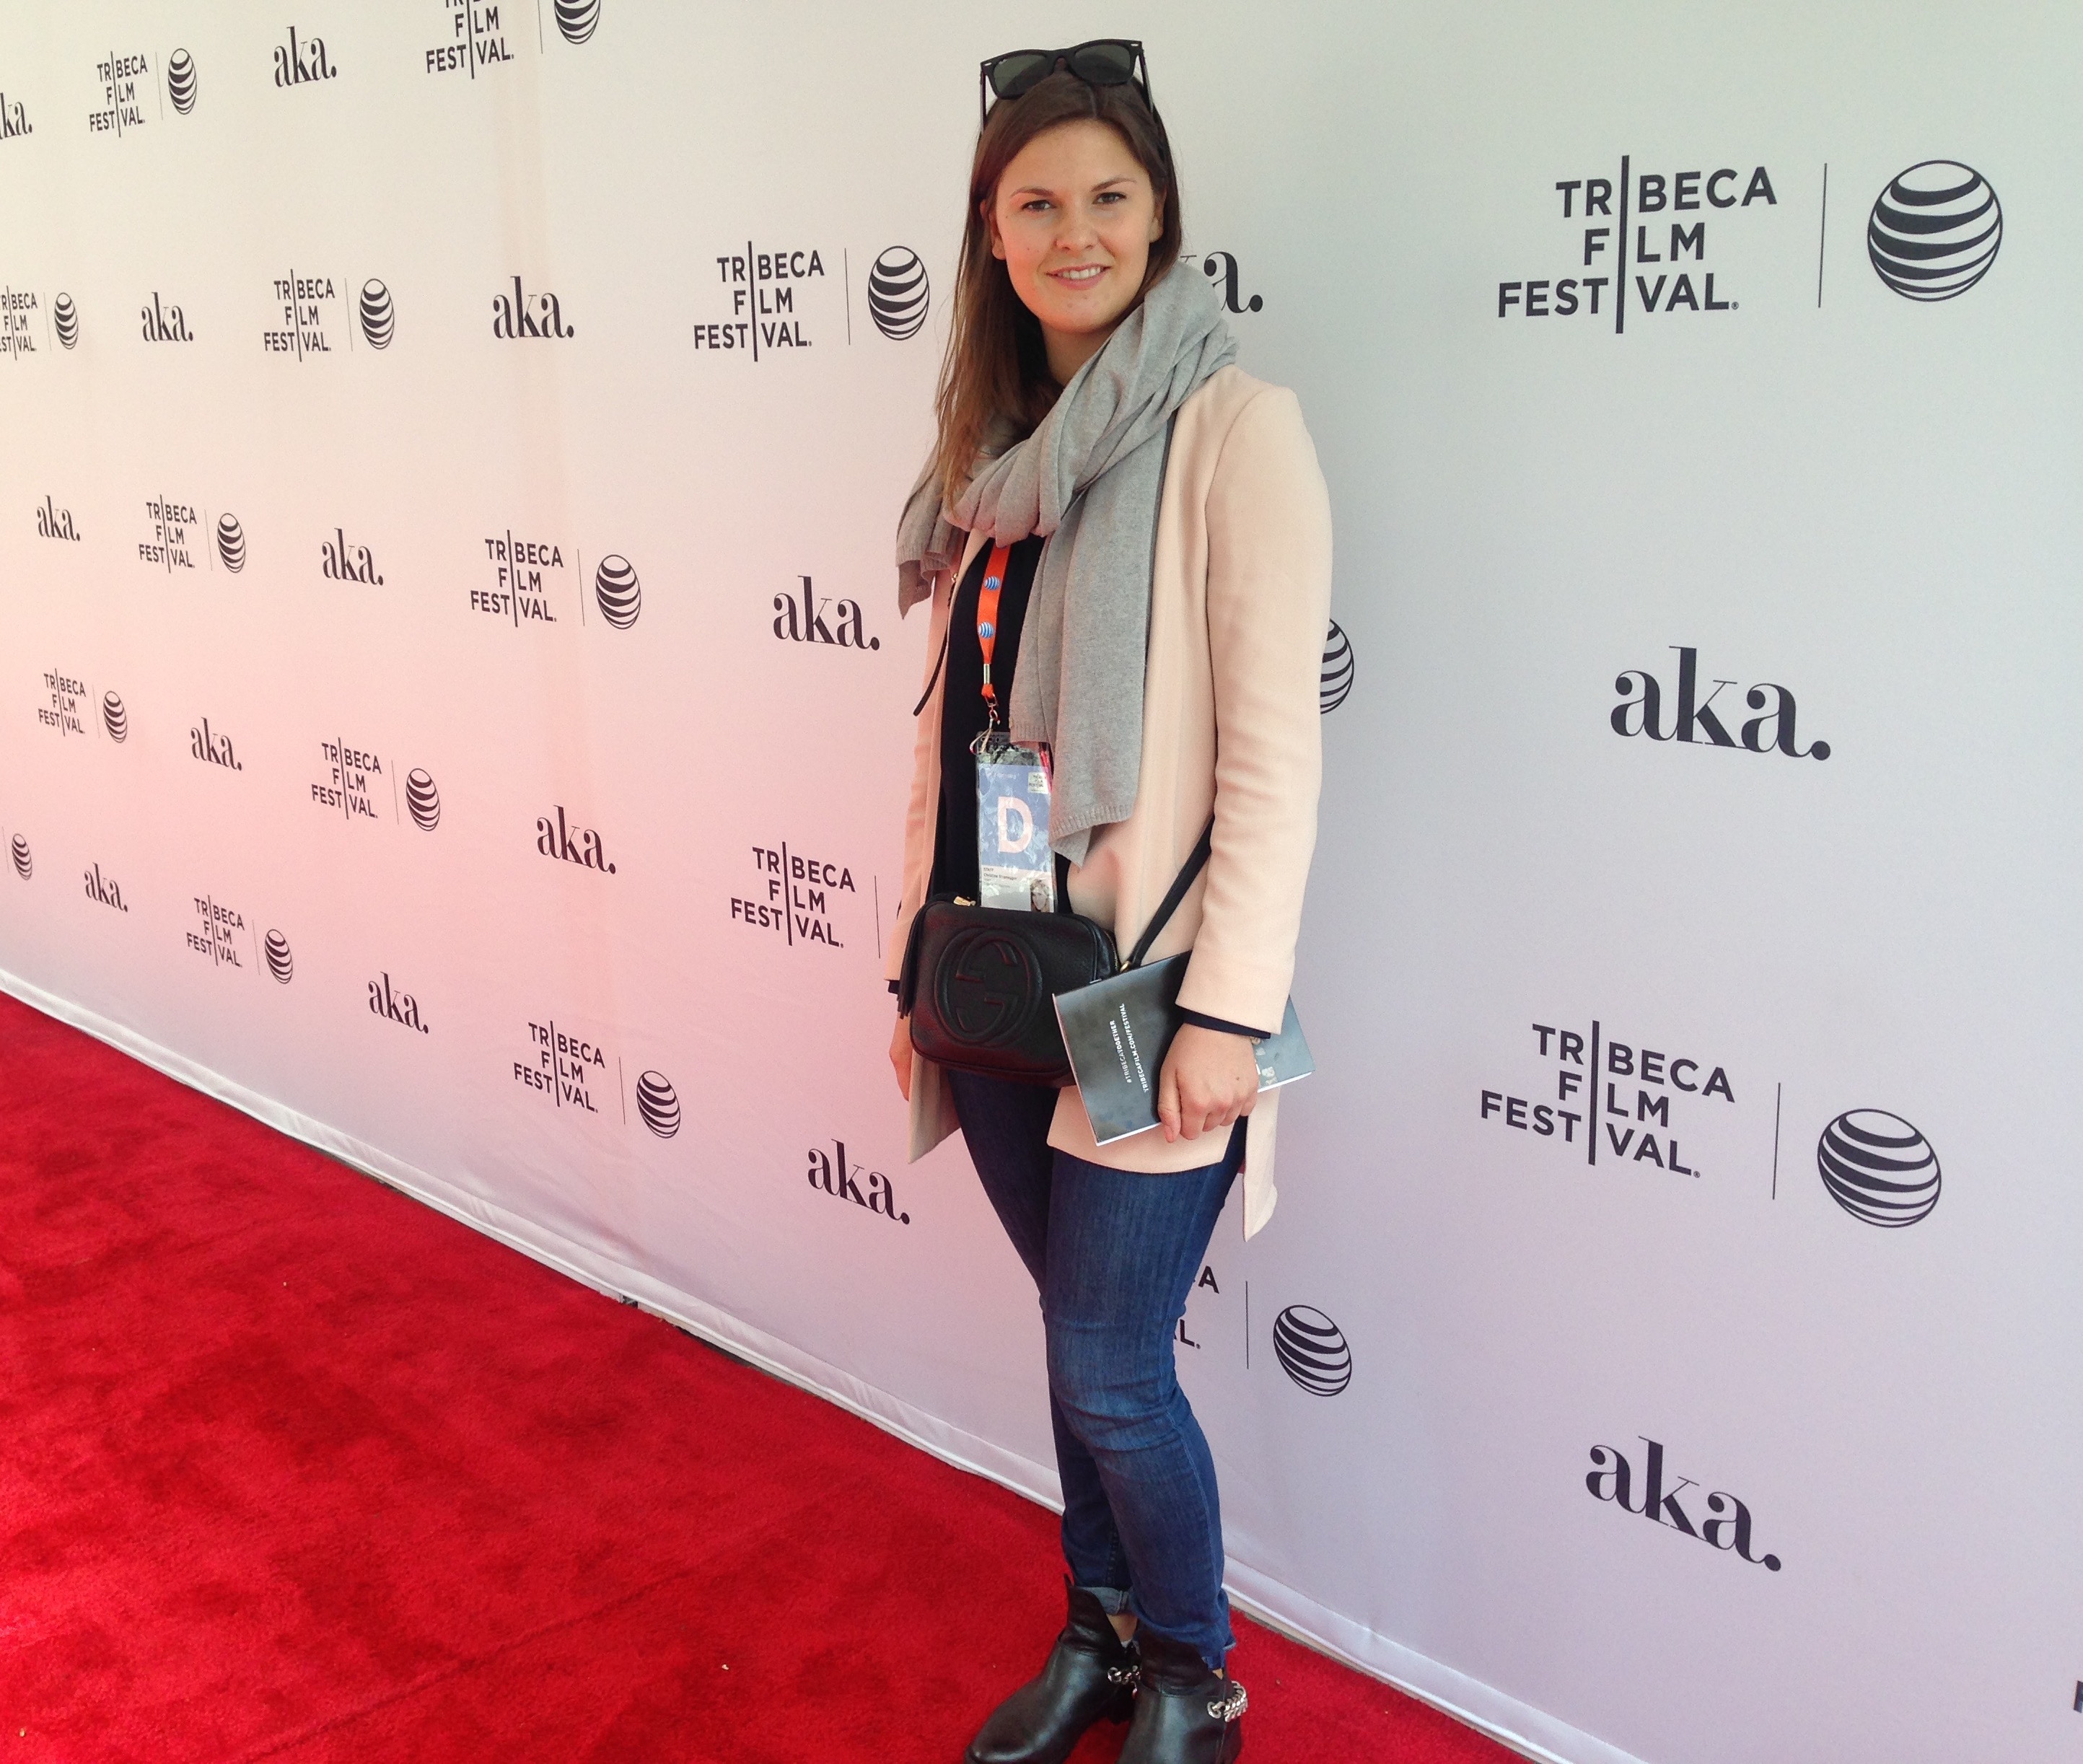 At Tribeca Film Festival 2015